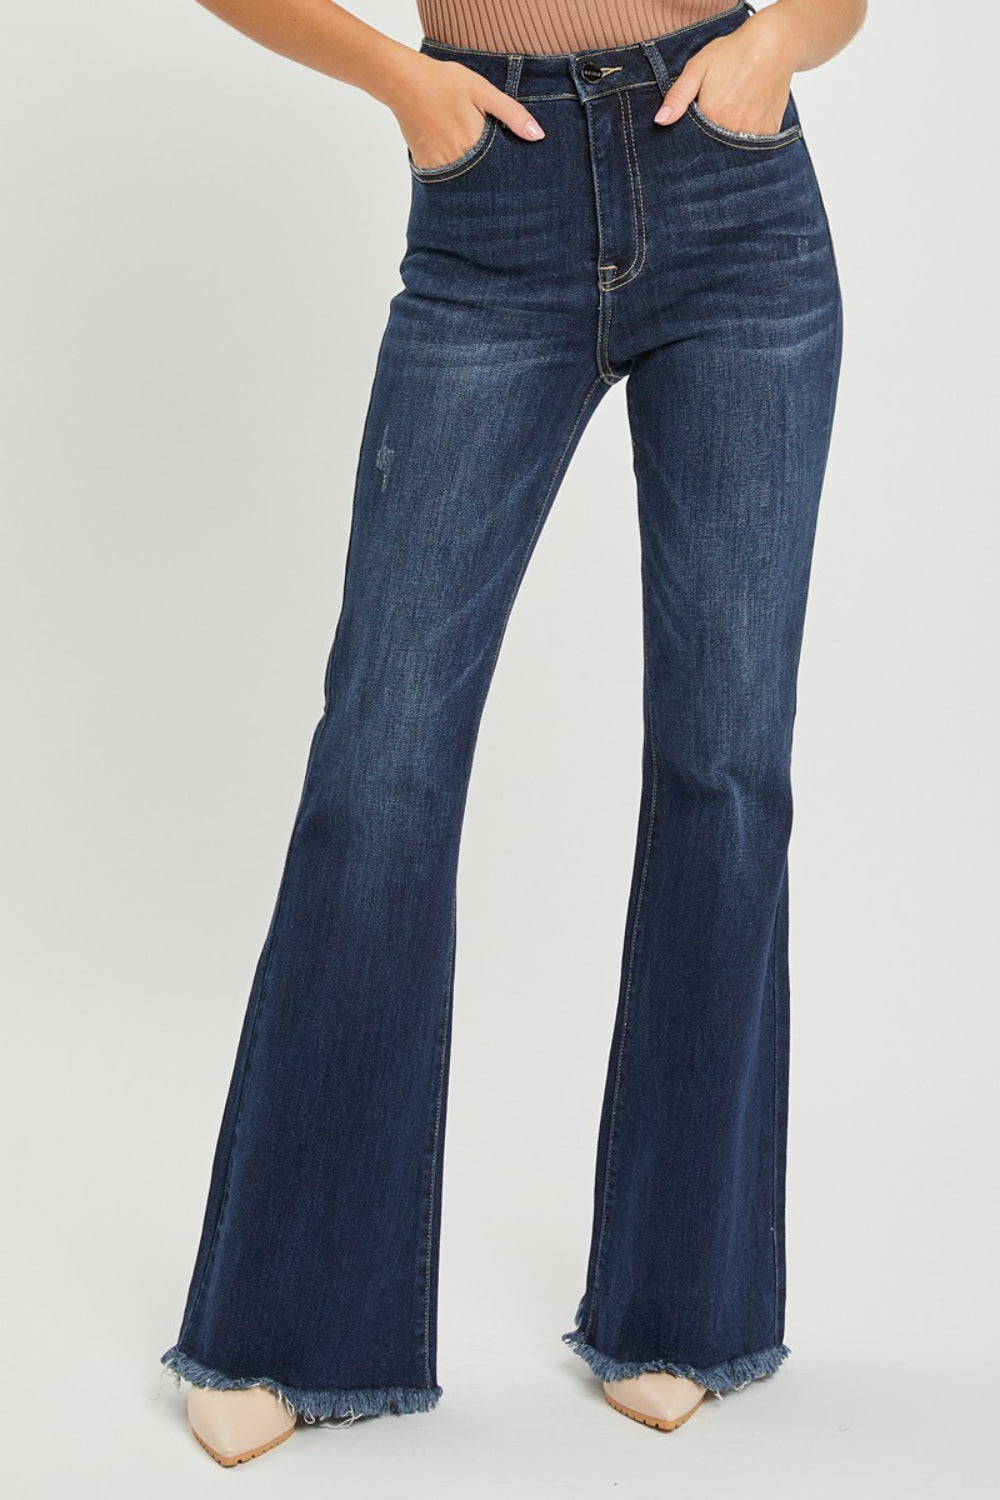 RISEN High Waist Raw Hem Flare Jeans pants Krazy Heart Designs Boutique DARK 0 